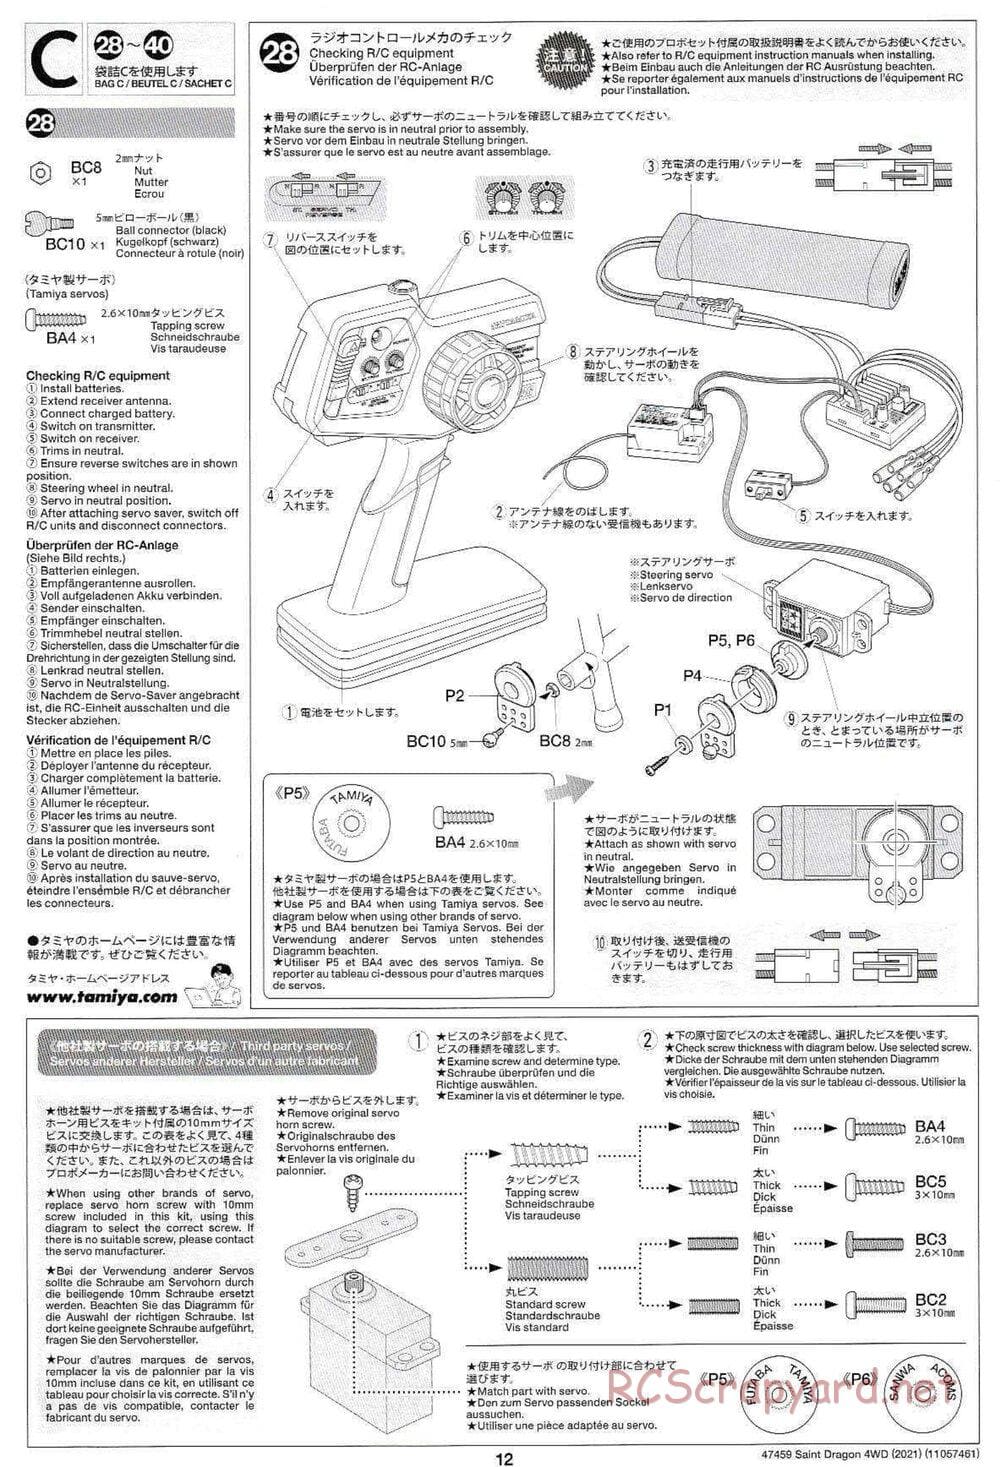 Tamiya - Saint Dragon (2021) Chassis - Manual - Page 12